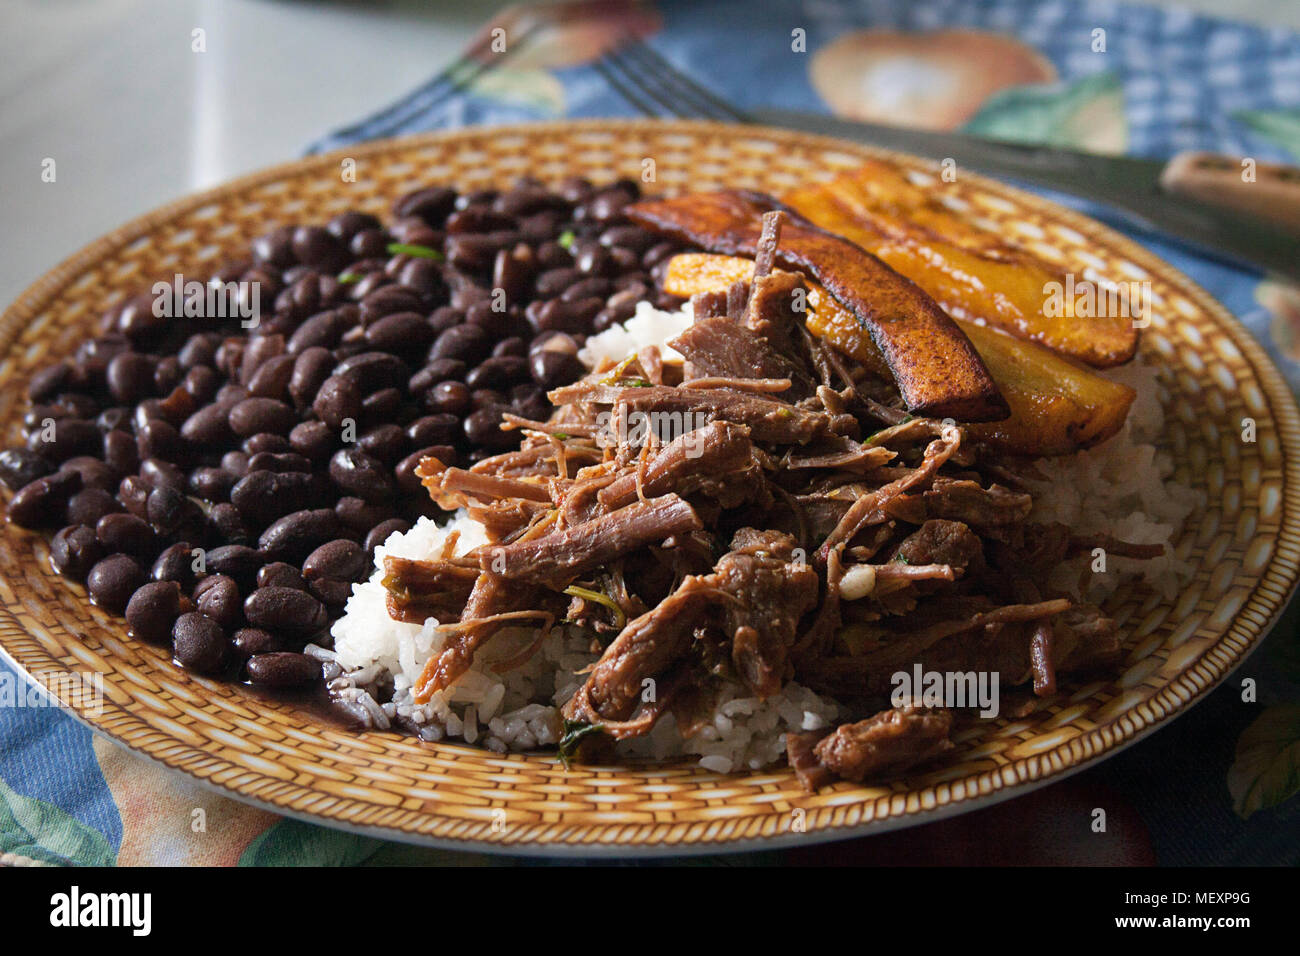 Comida venezolana fotografías e imágenes de alta resolución - Alamy